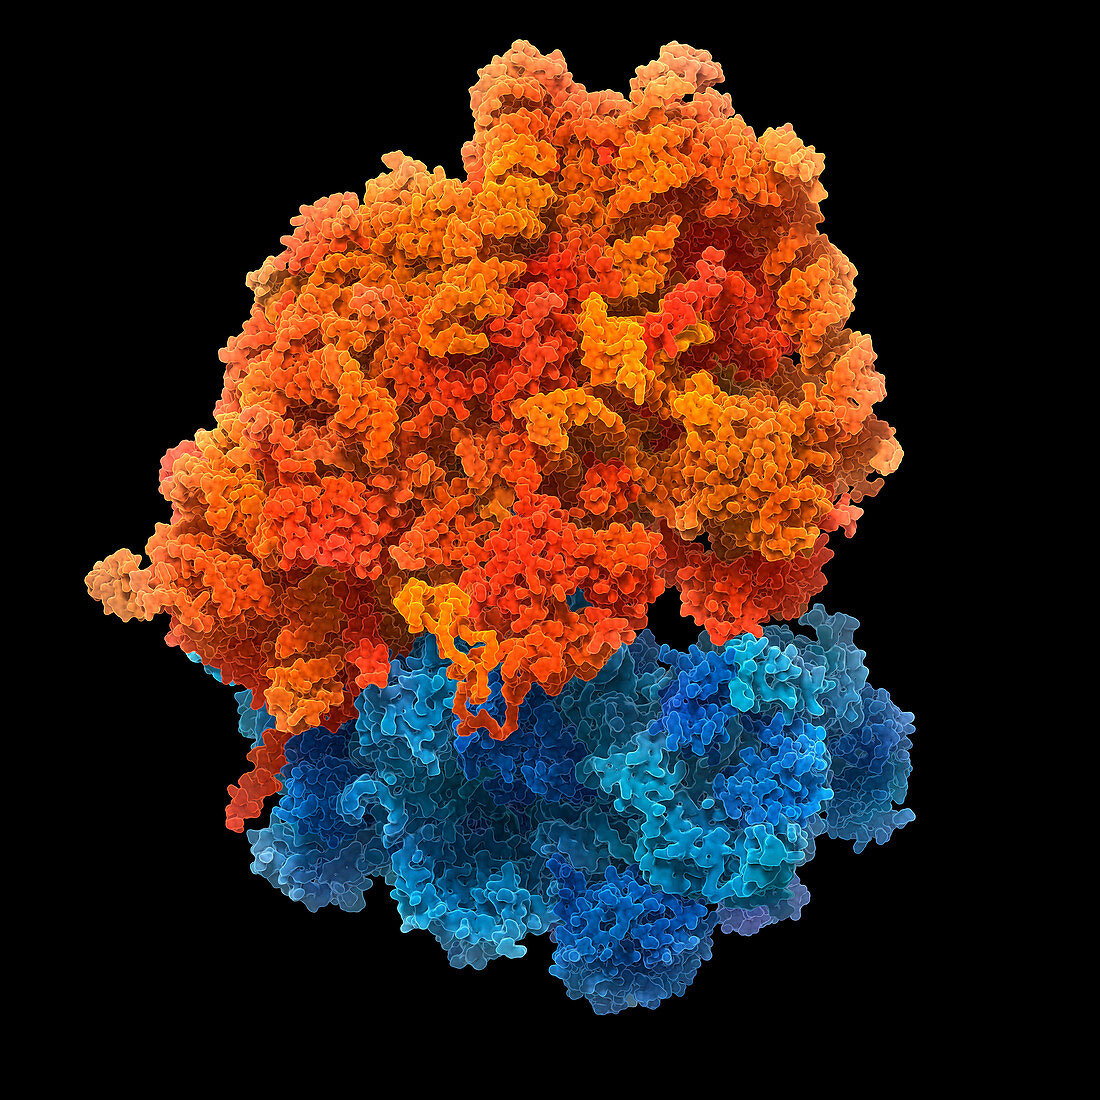 Human ribosome, illustration